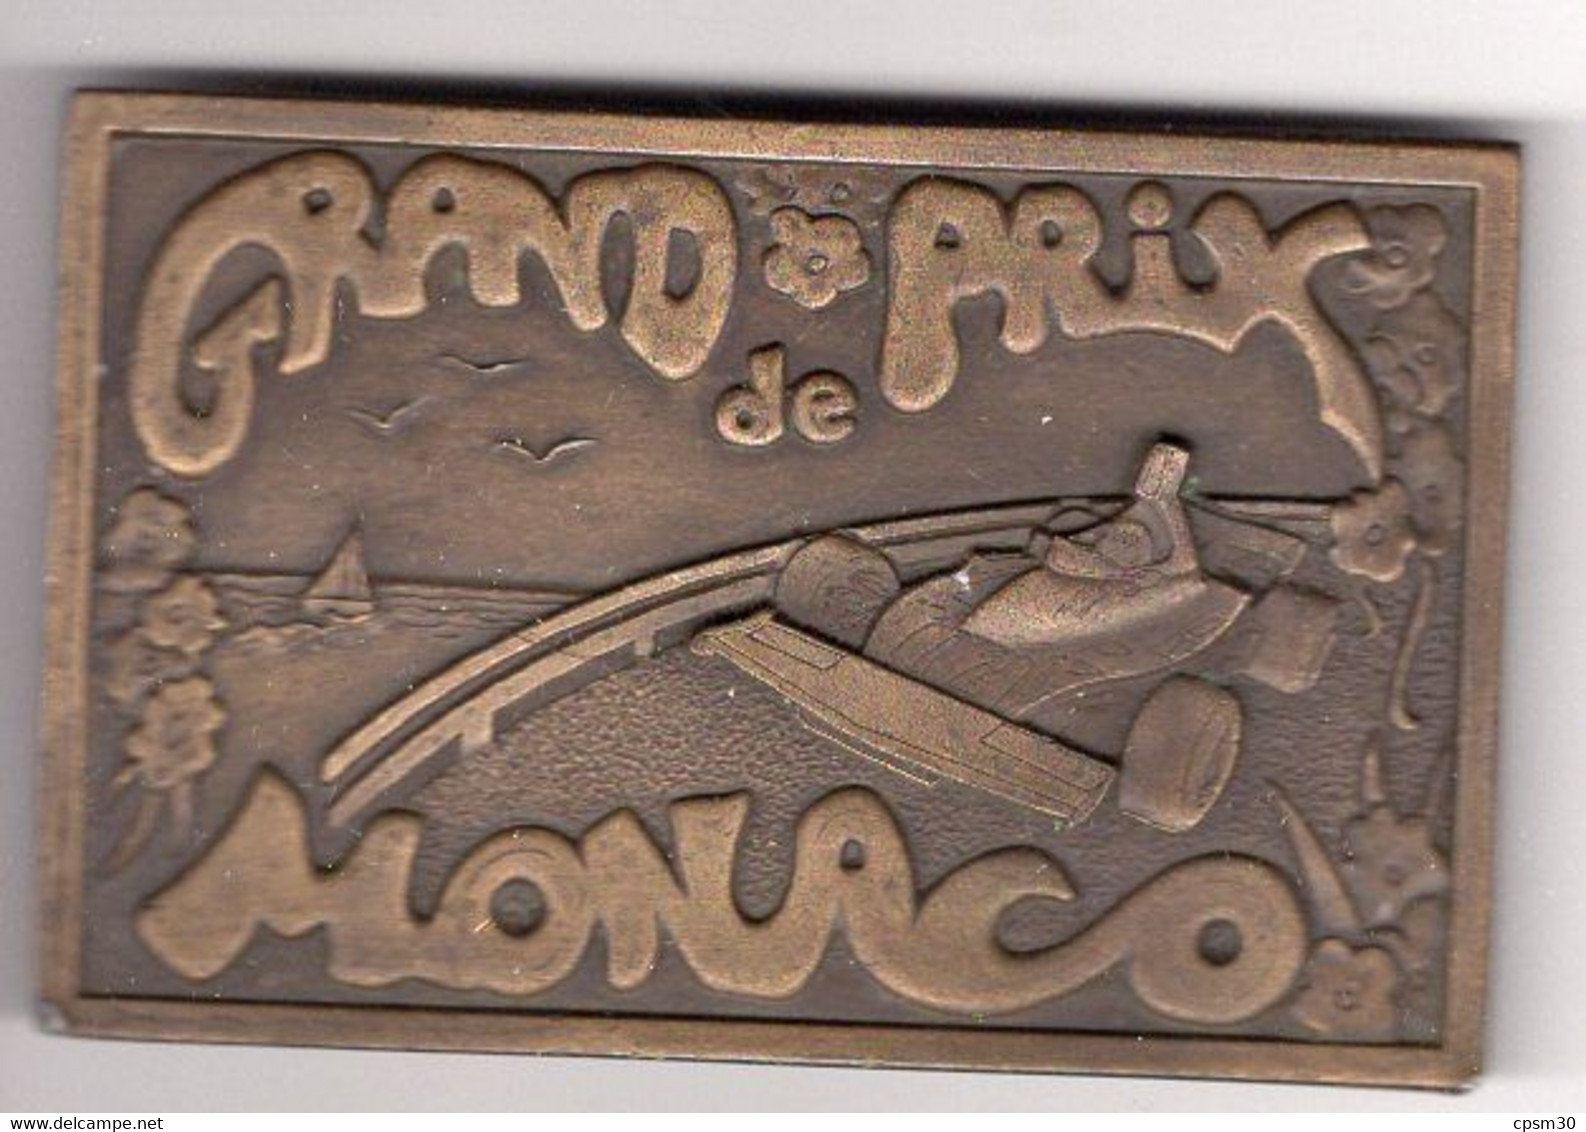 Boucle De Ceinture GRAND PRIX DE MONACO - Uniformes Recordatorios & Misc